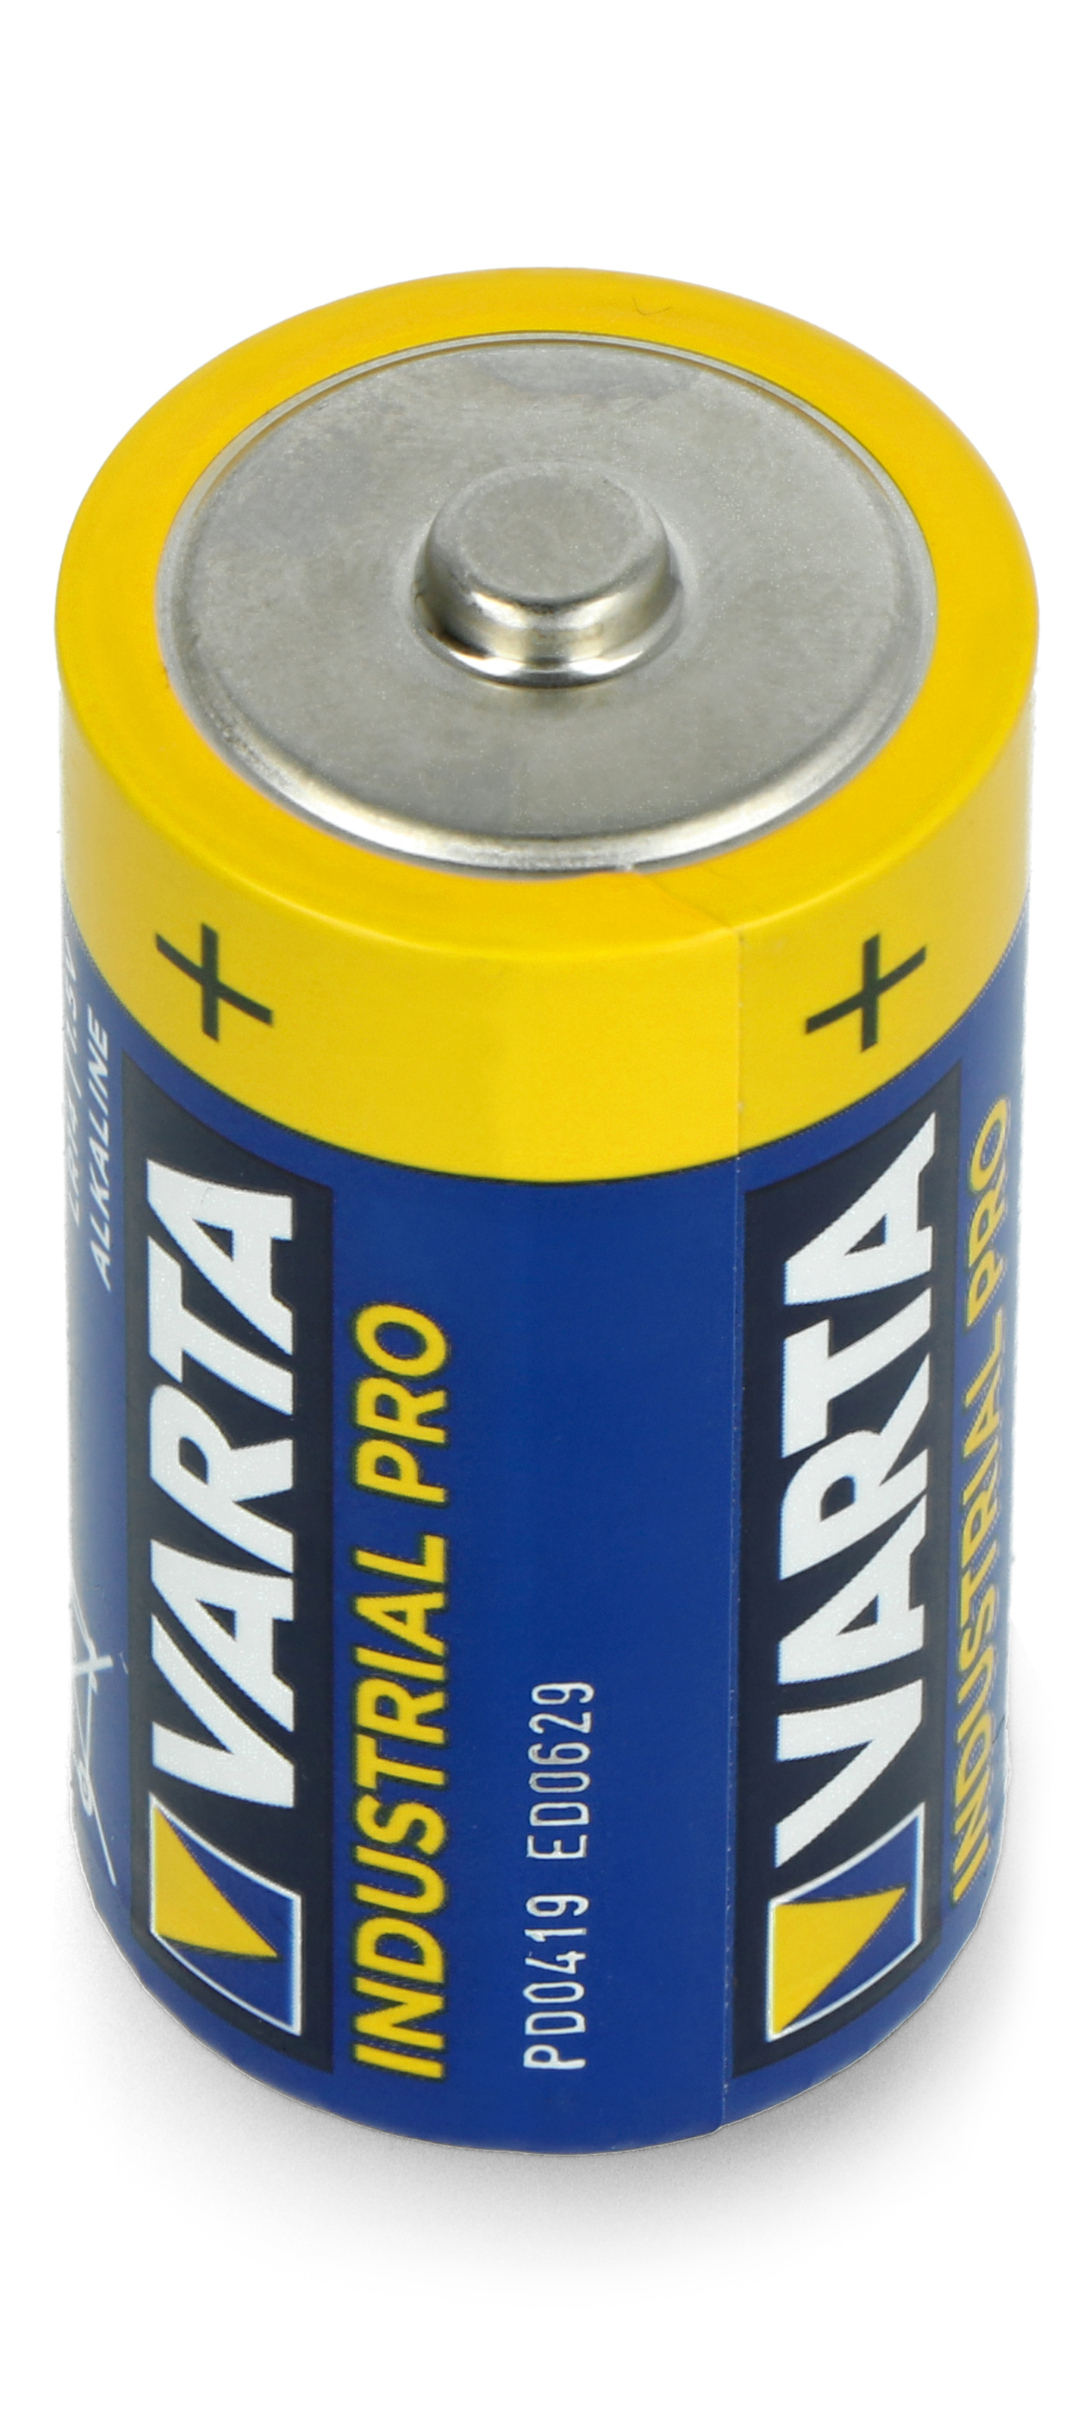 LR14 C 1,5V alkaline battery. Blister of 2 pieces